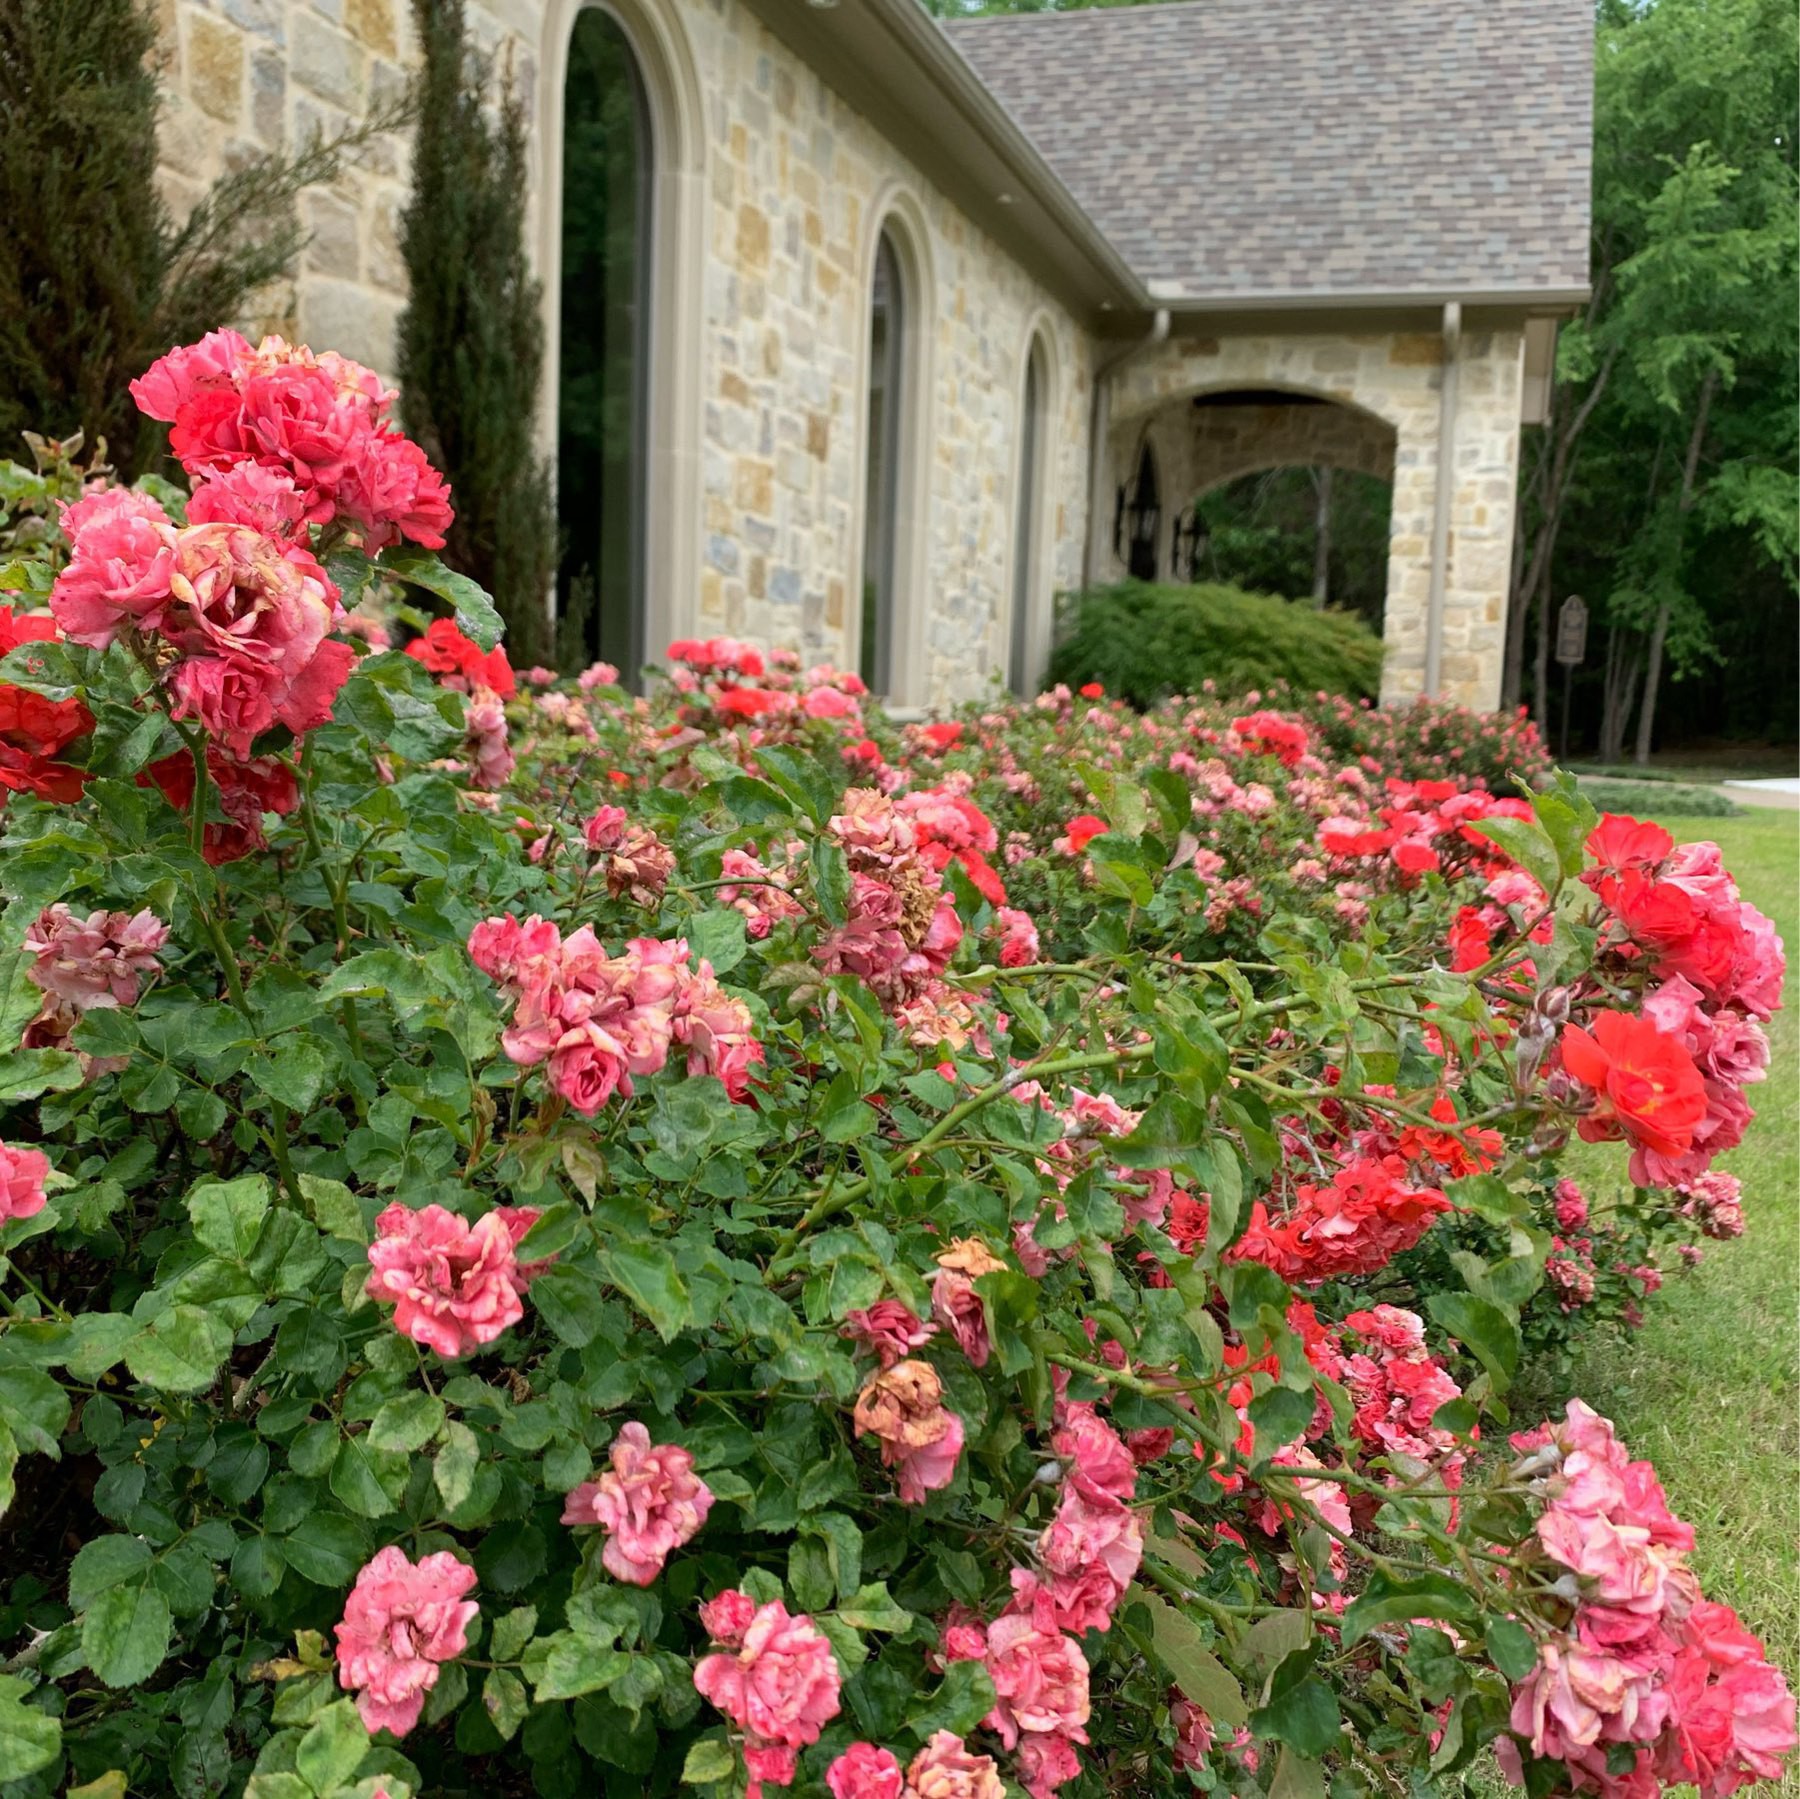 Rose bushes in full bloom